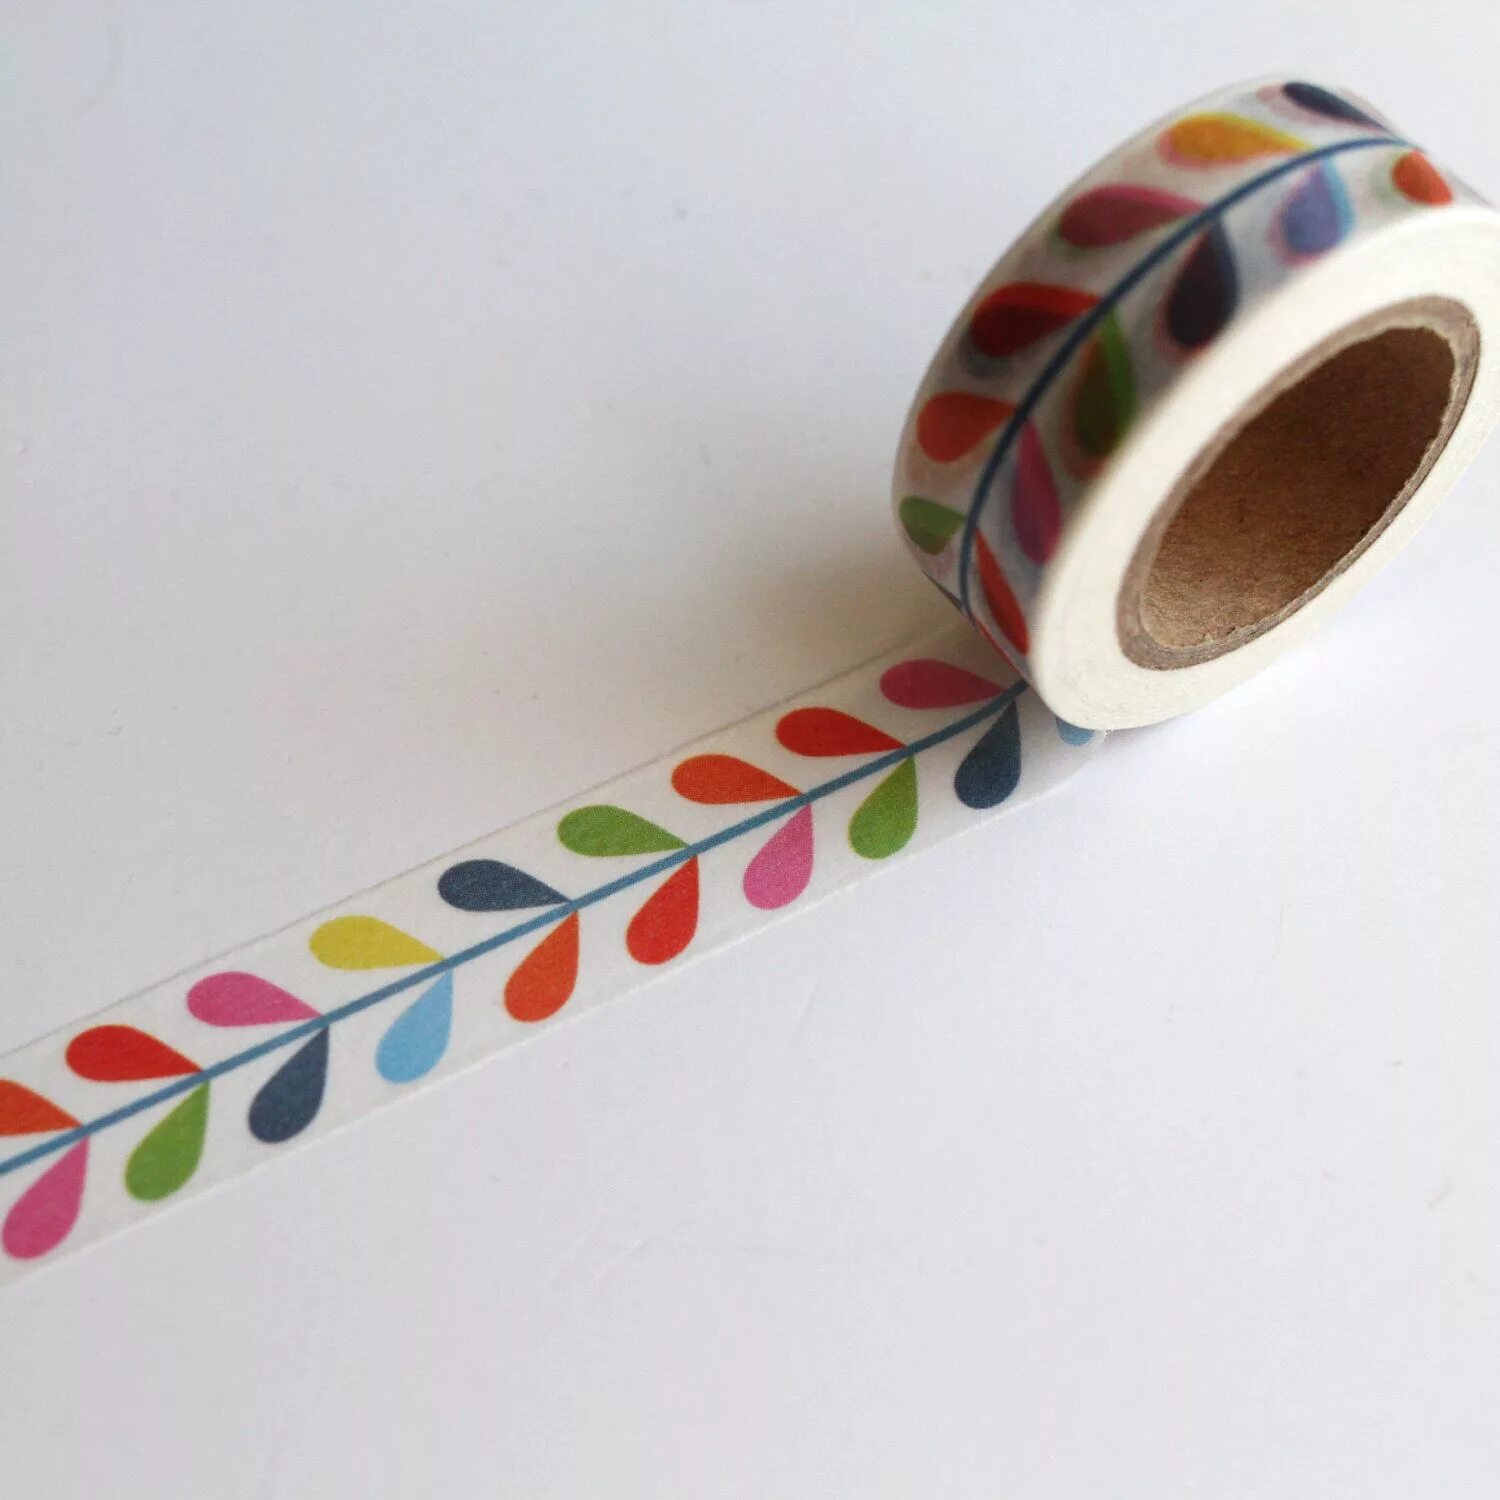 Washi Tape скотч декоративный. Rainbow Tape скотч. Поделки со скотчем. Скотч рисунок.